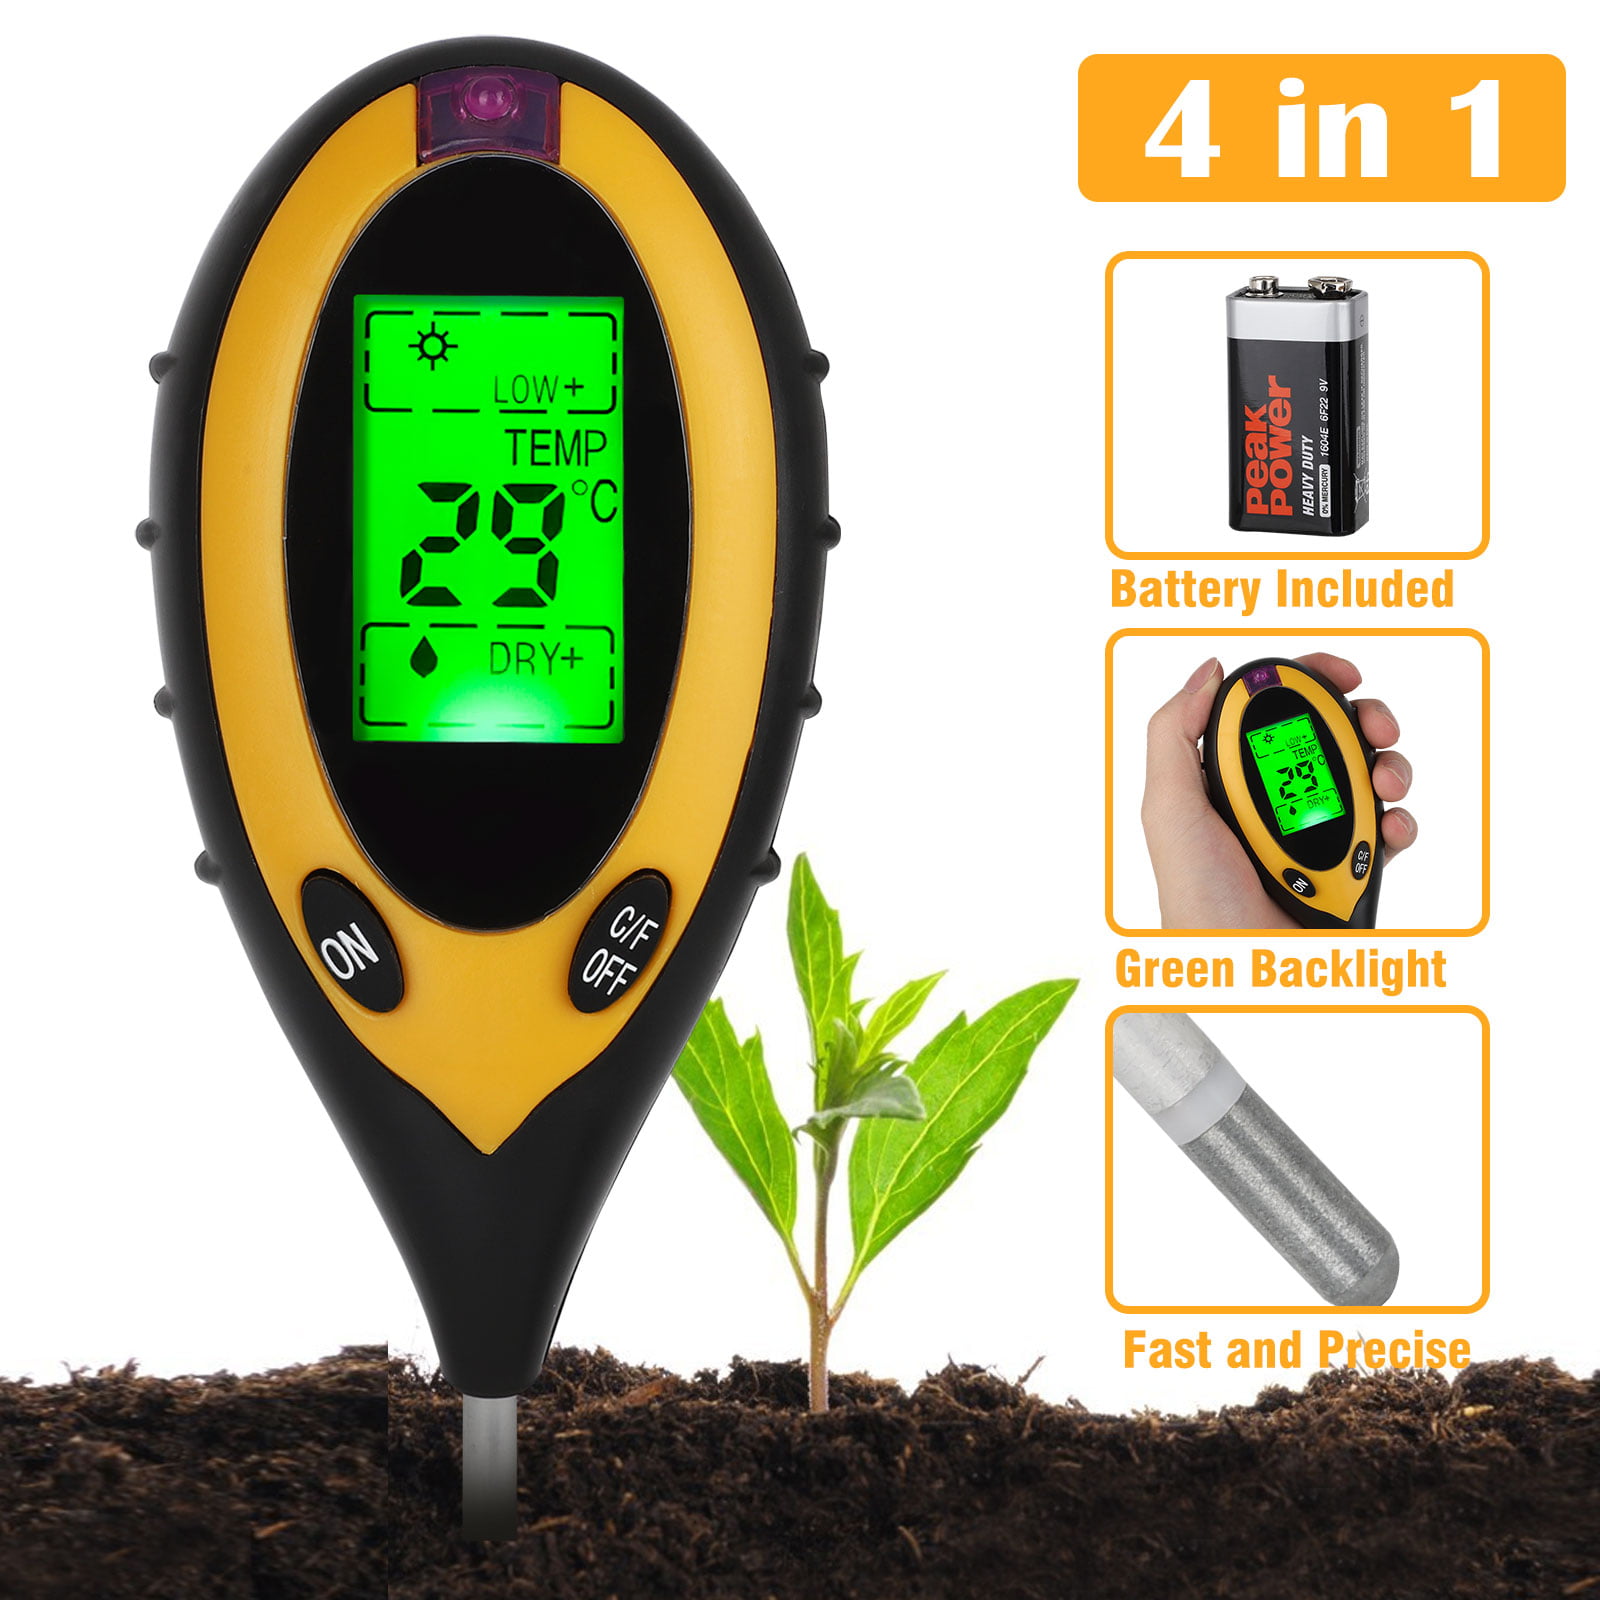 4in1 Plant Earth Soil PH Moisture Light Soil Meter Temperature Thermometer 2020